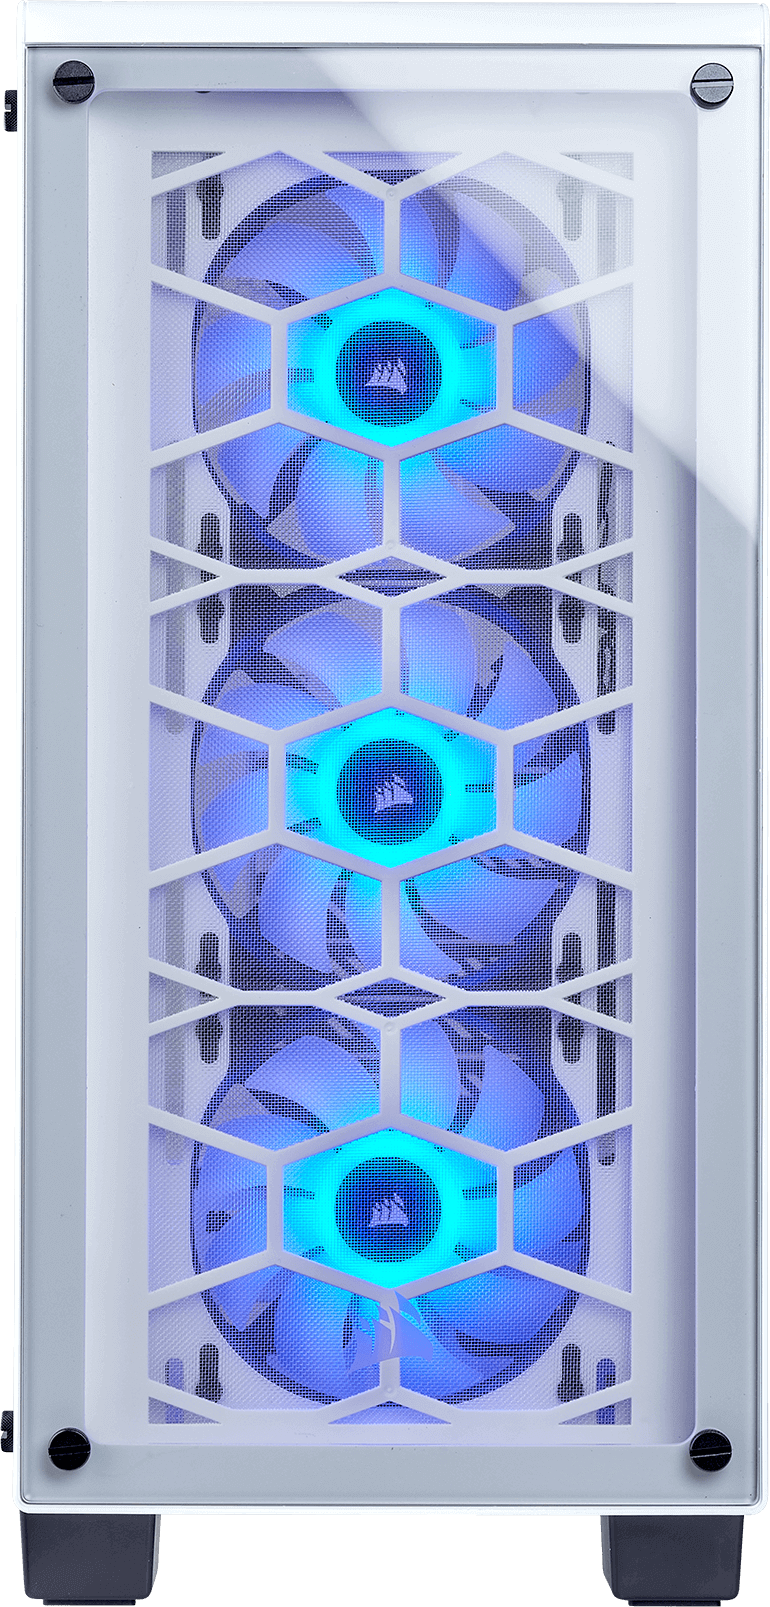 Slumkvarter Oberst Mellem Crystal Series 460X RGB Compact ATX Mid-Tower Case — White